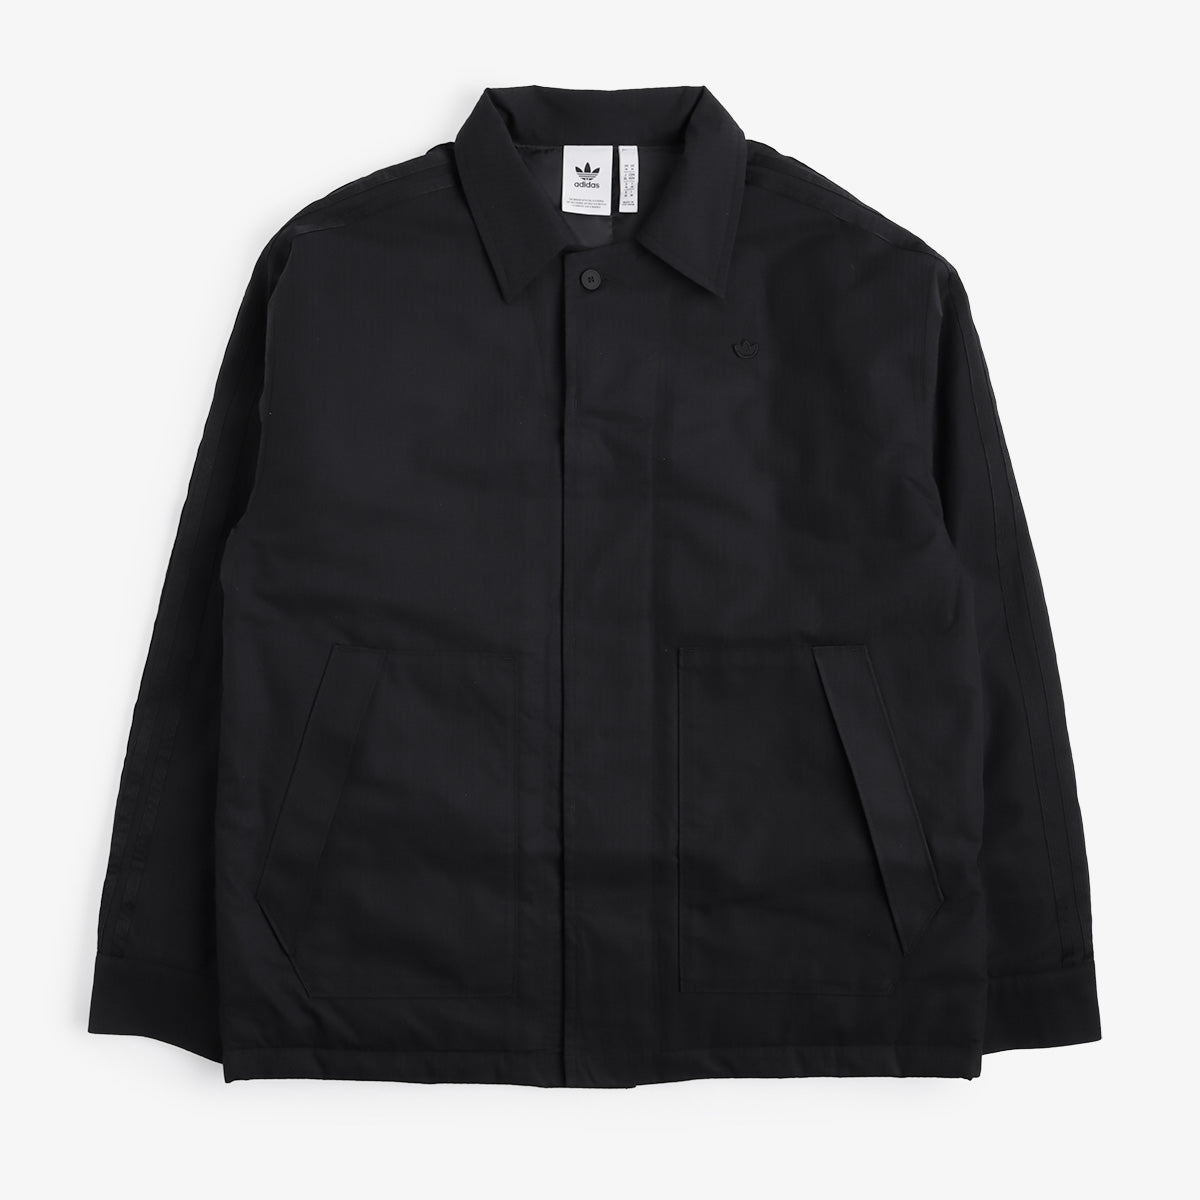 Adidas Originals Premium Essentials+ C FZ Jacket, Black, Detail Shot 1